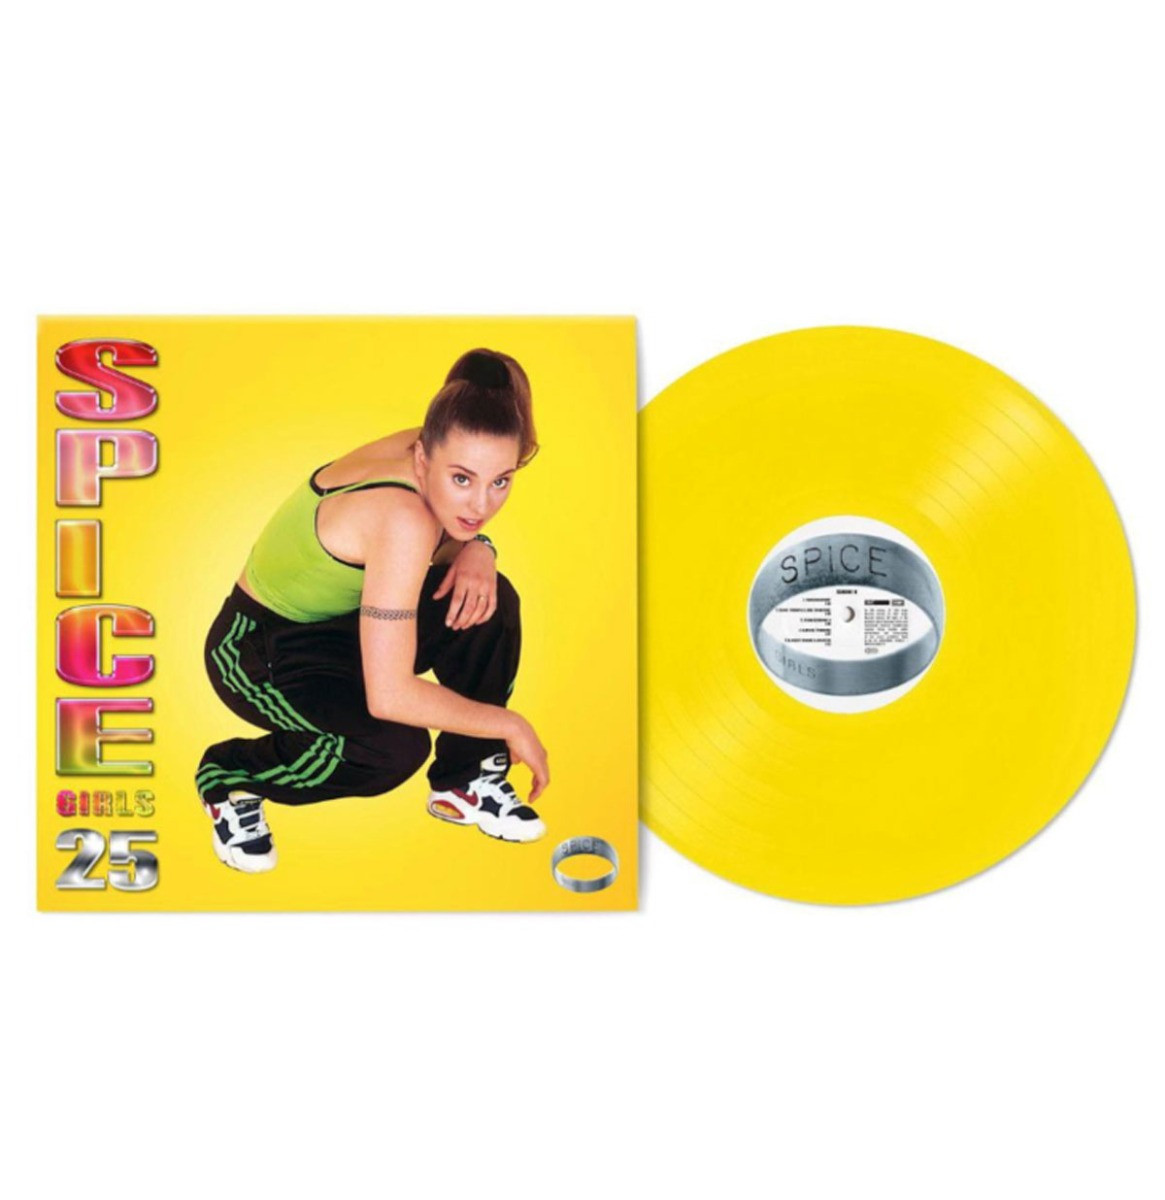 Spice Girls - 25 Mel C Cover LP Yellow Vinyl